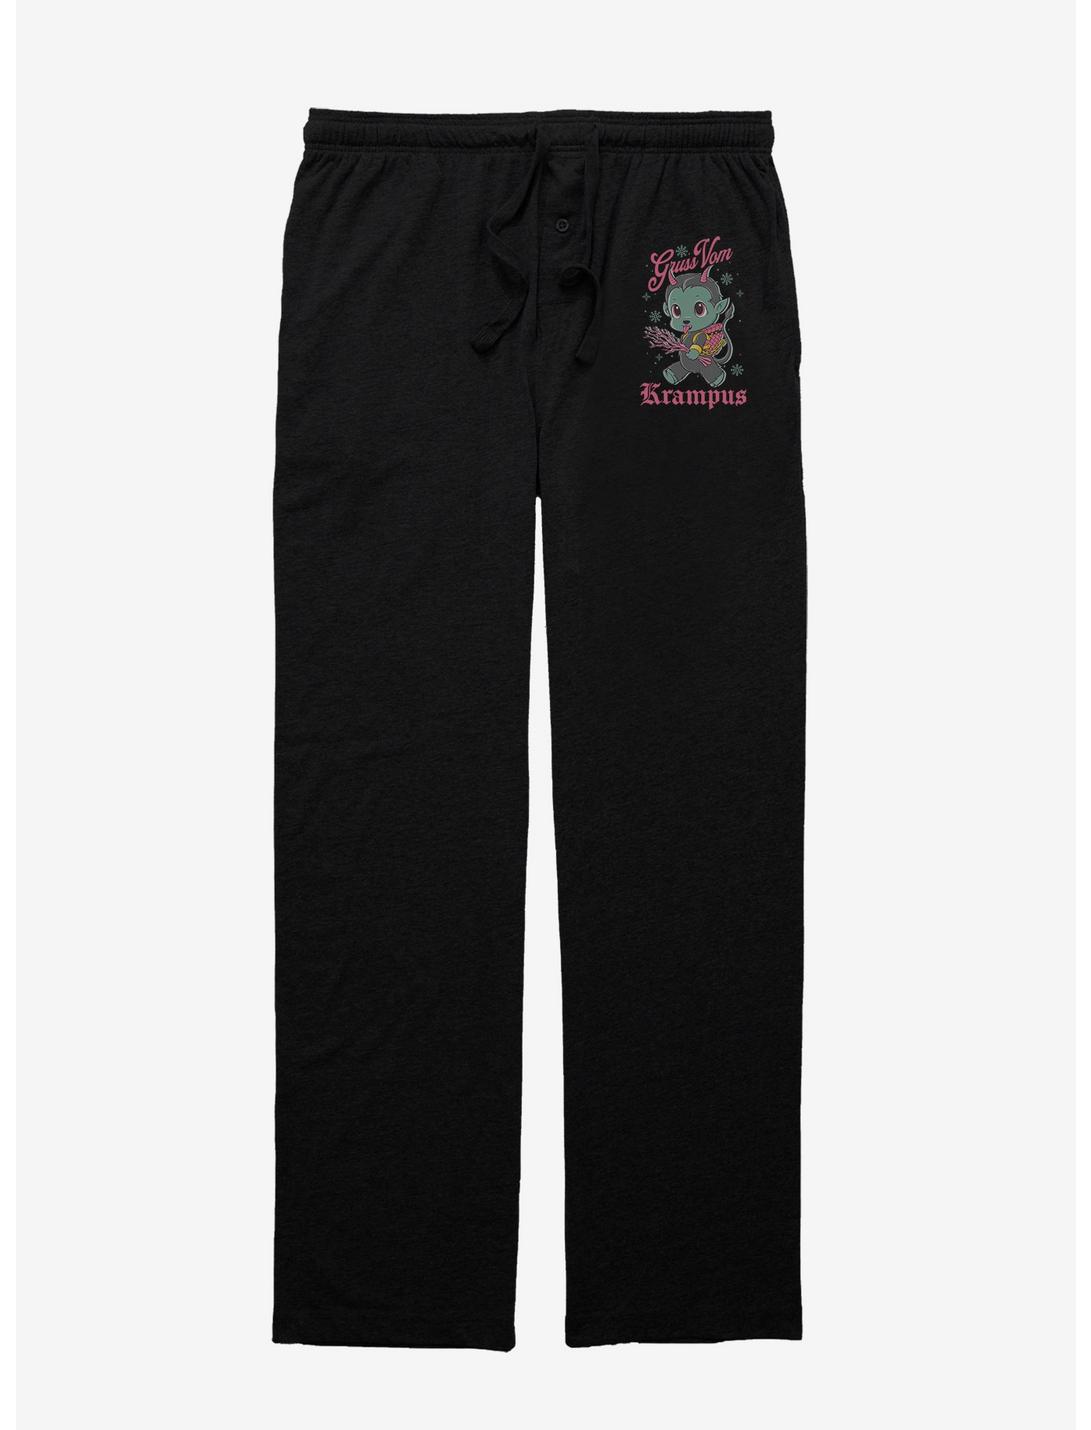 Gruss Von Krampus Pajama Pants, BLACK, hi-res